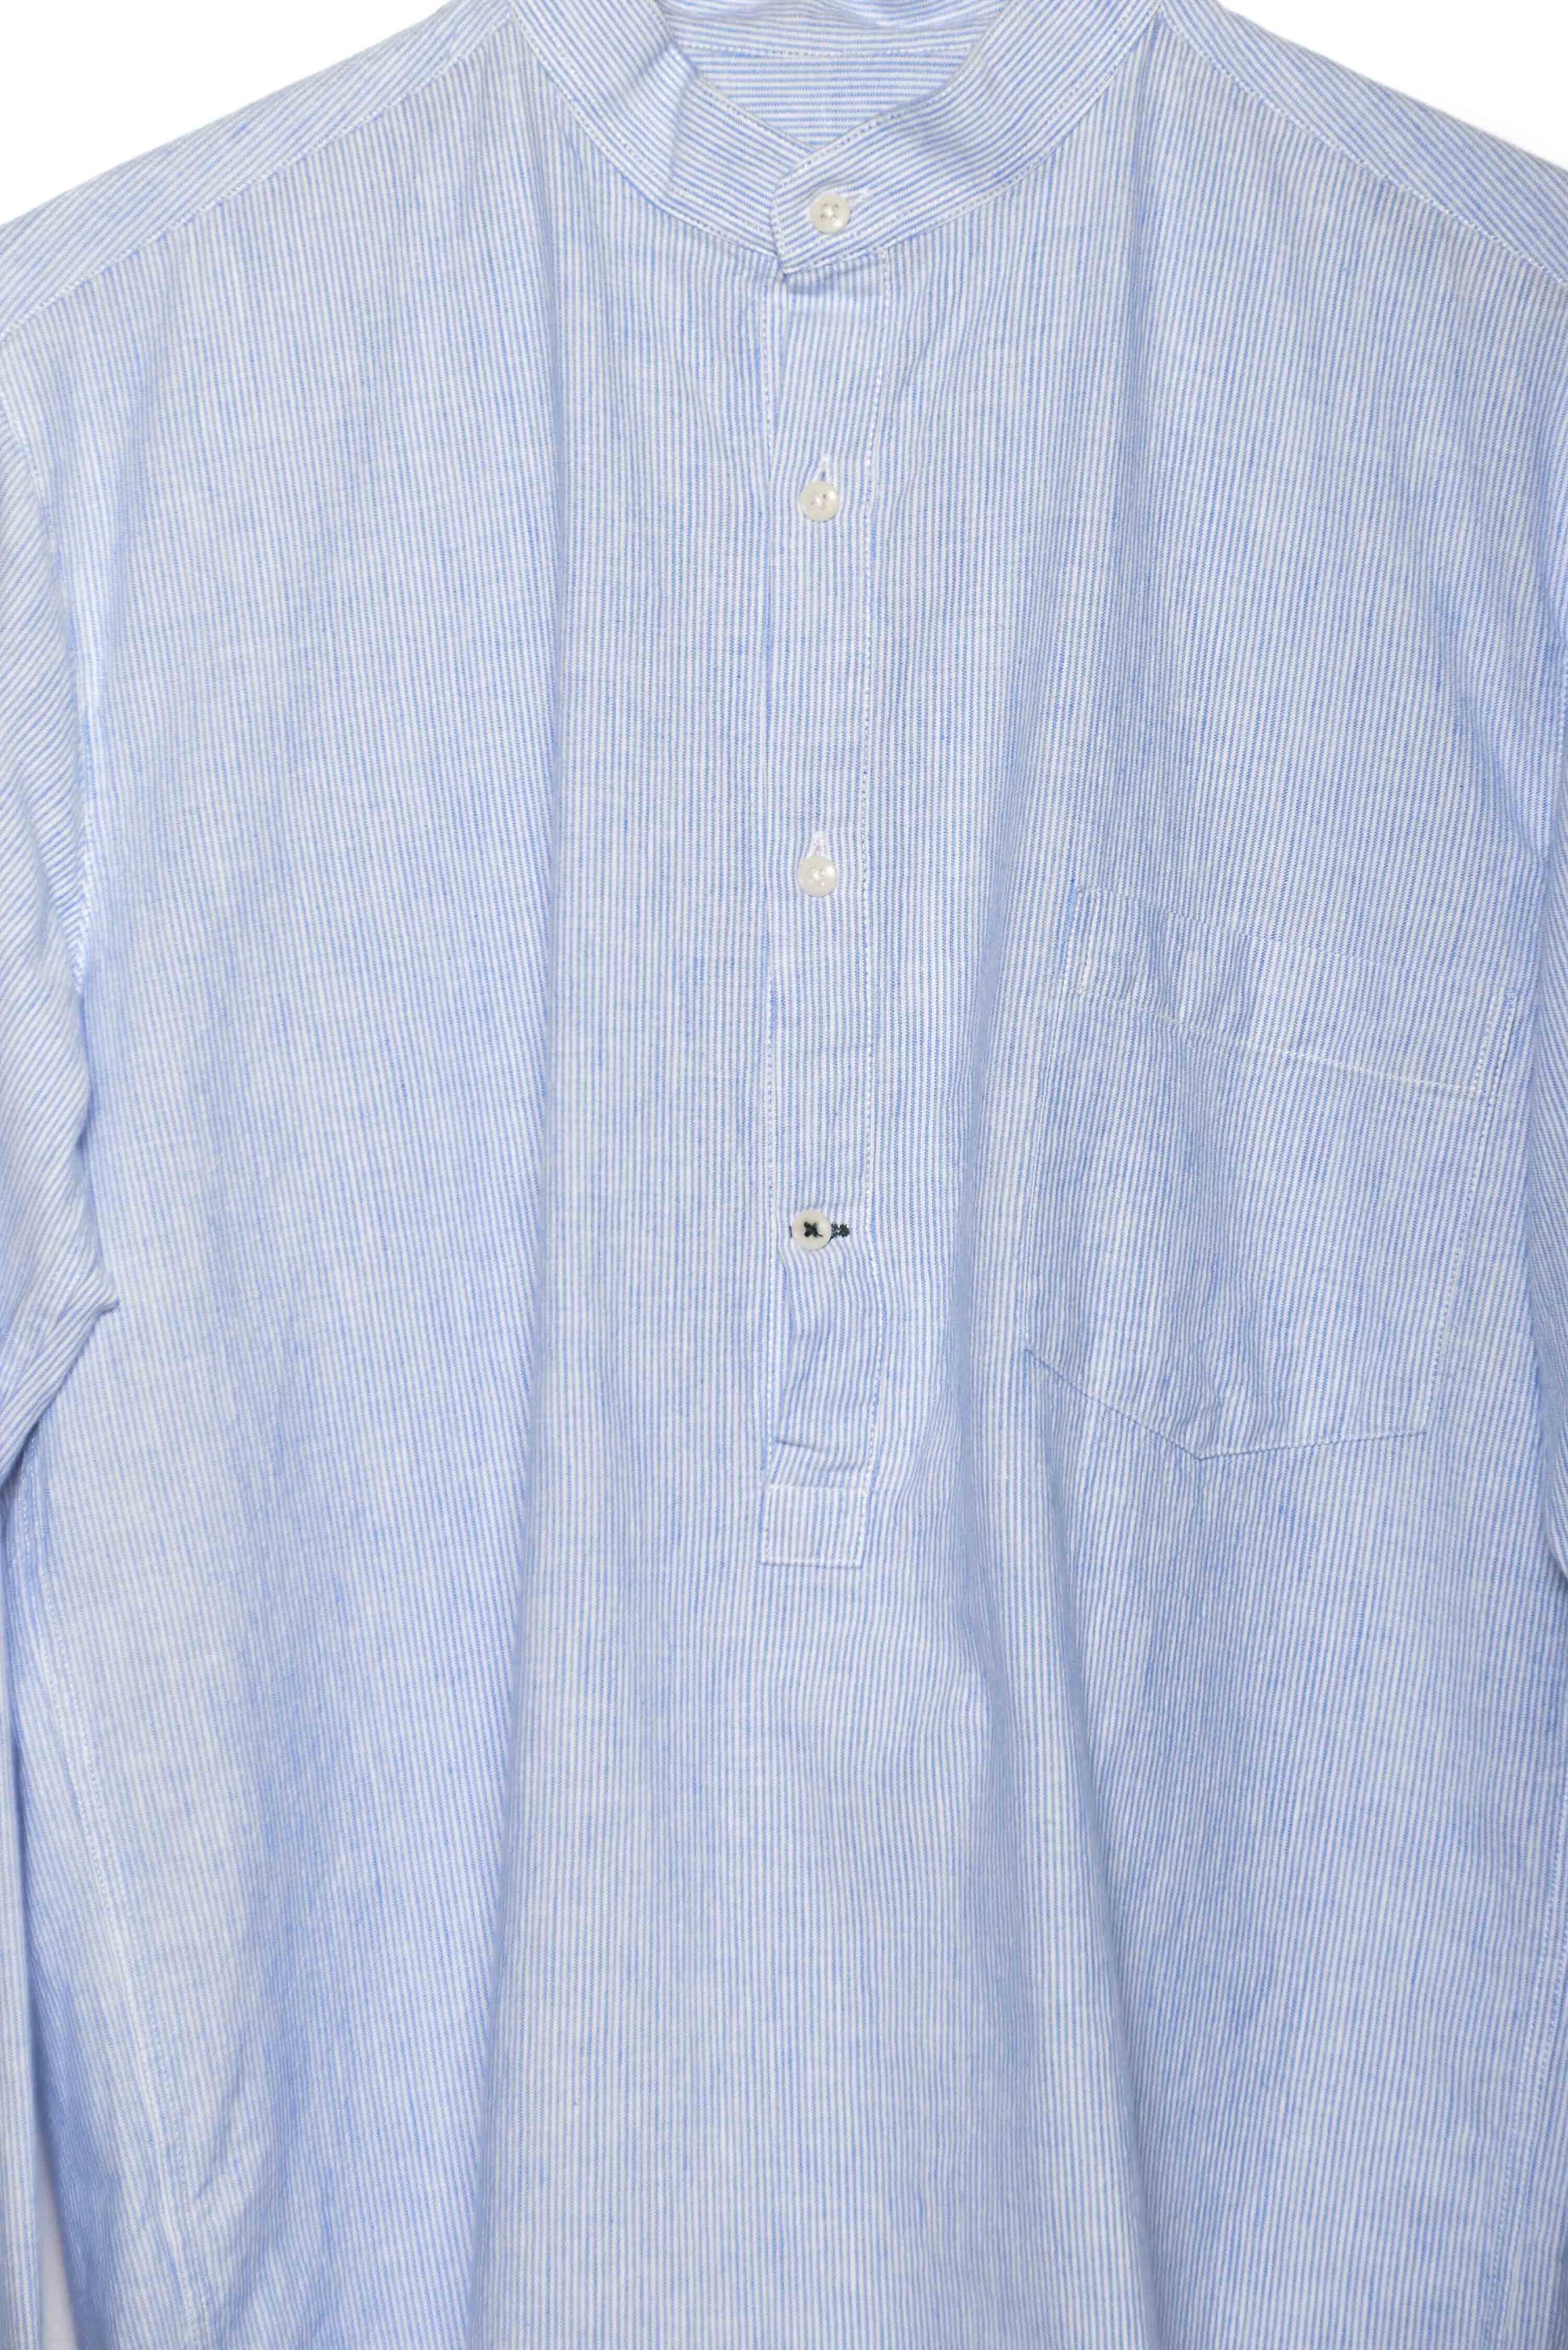 Carpasus Pullover Shirt Marzili Blaue Streifen